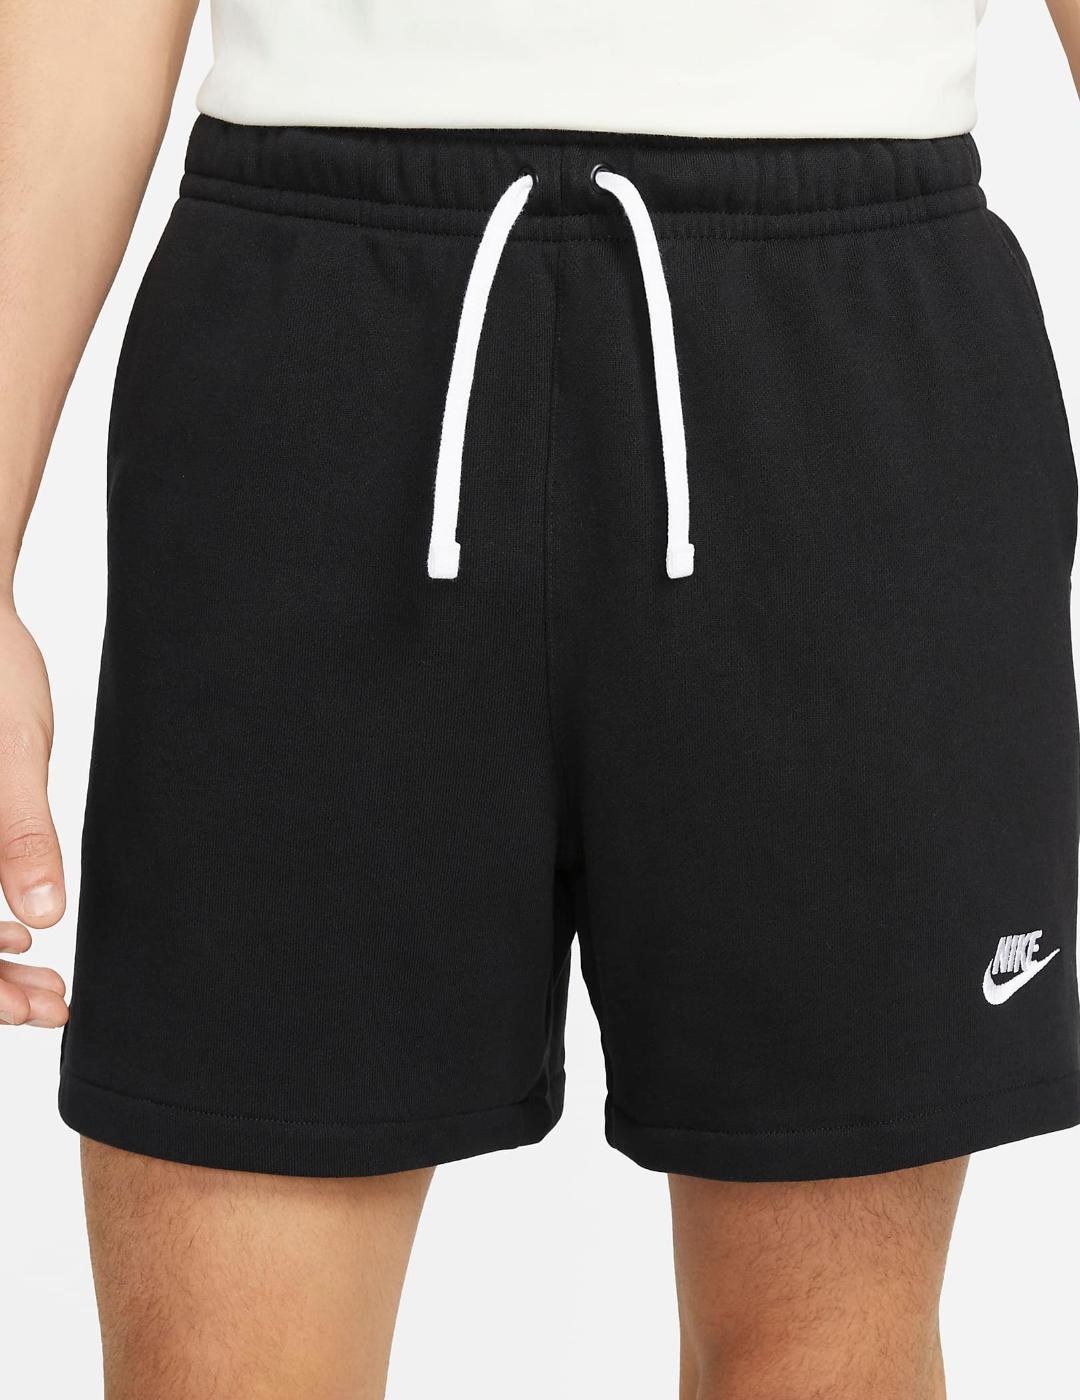 Pantalon Corto Nike Para Chico color Negro